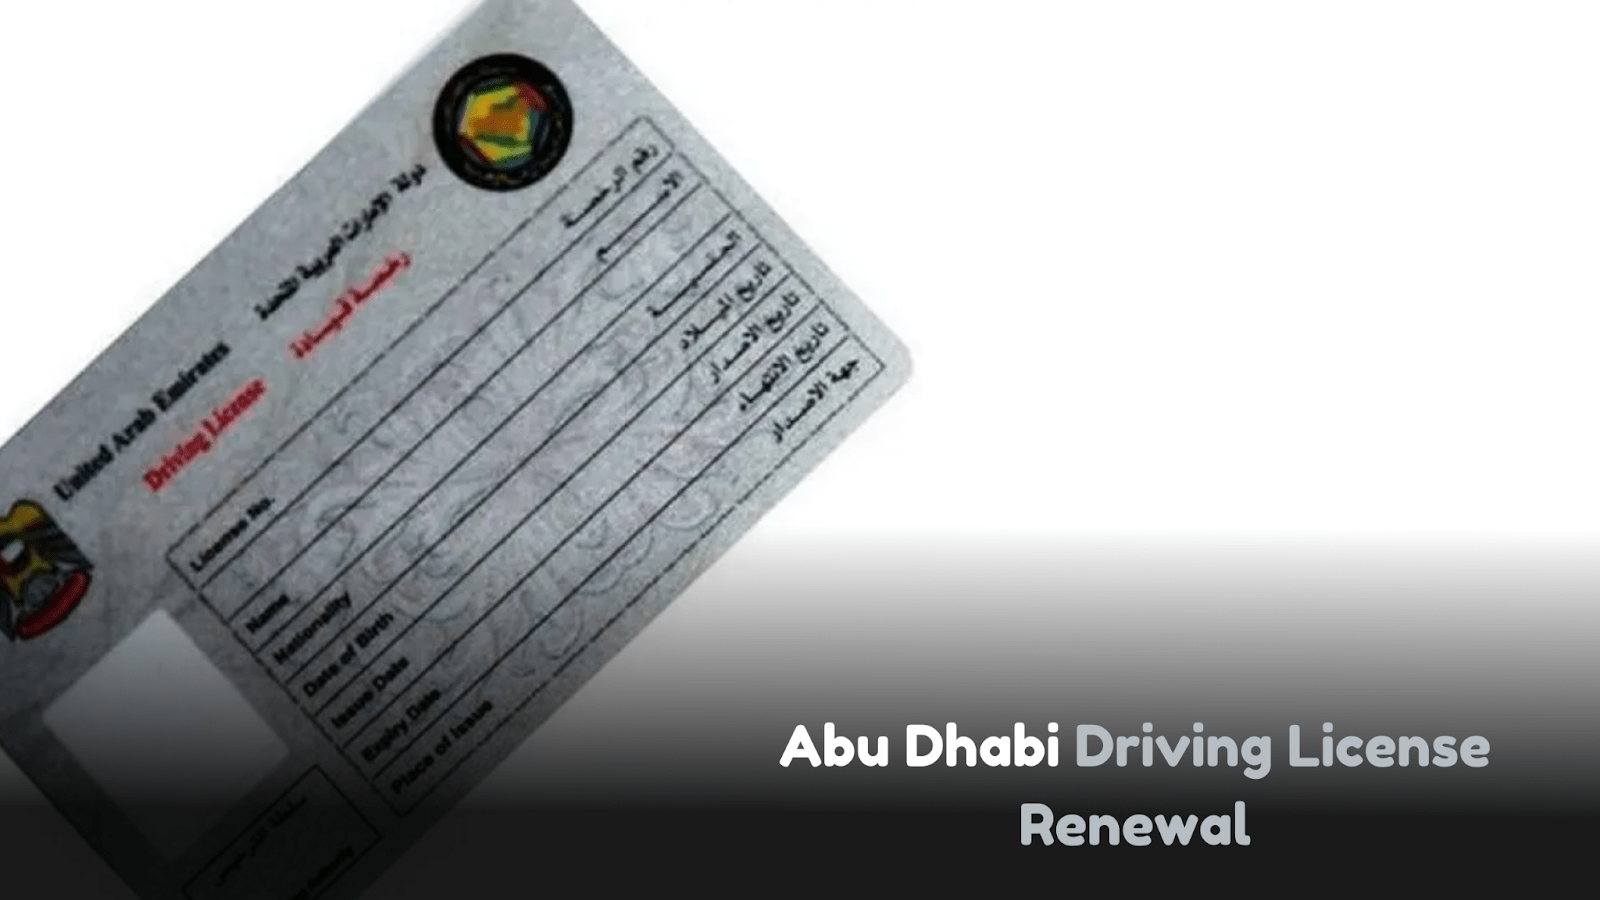 A Guide To Abu Dhabi Driving License Renewal